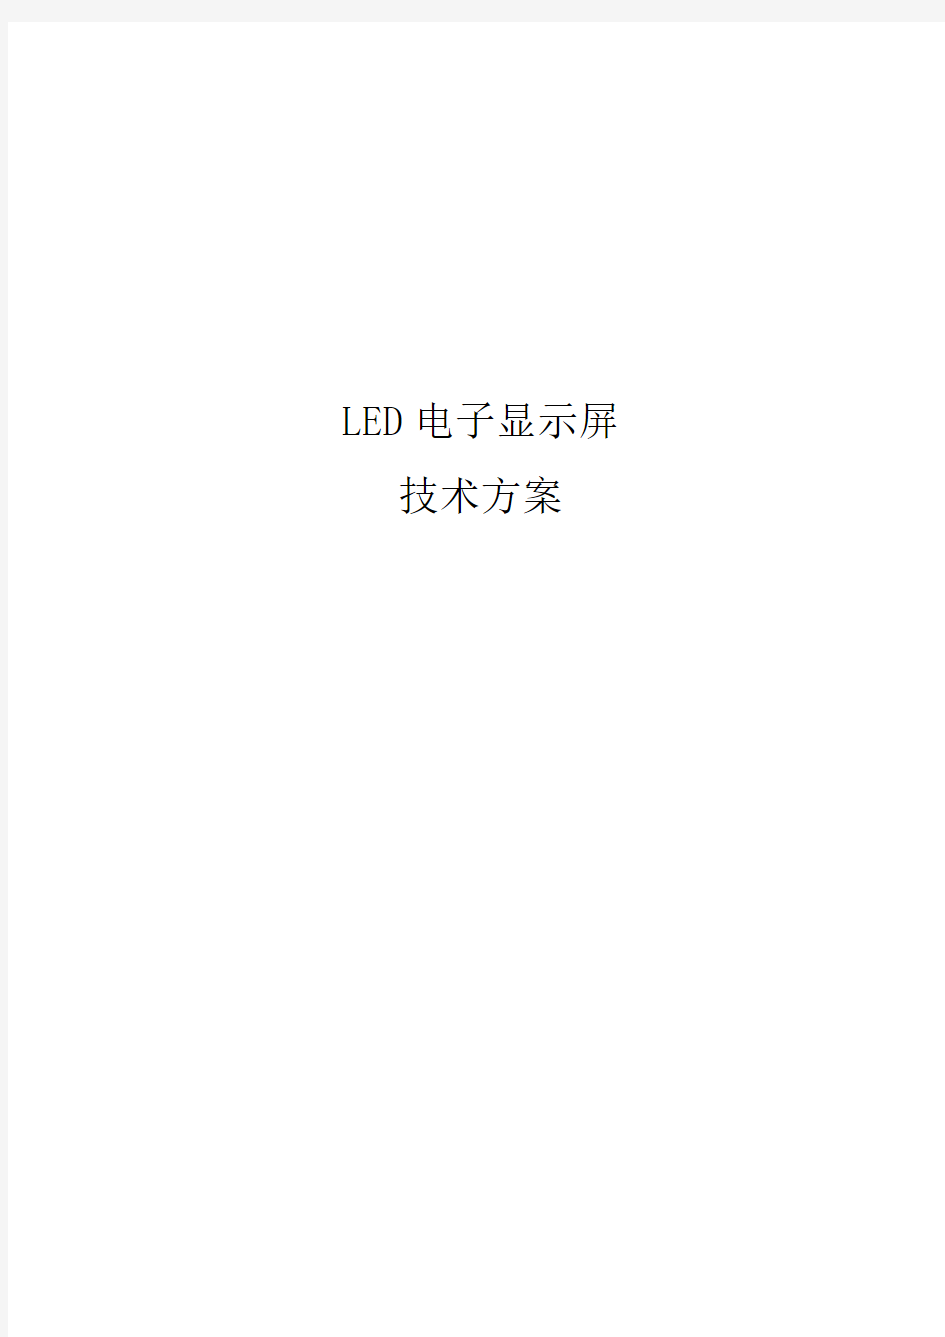 LED显示屏技术处理方案